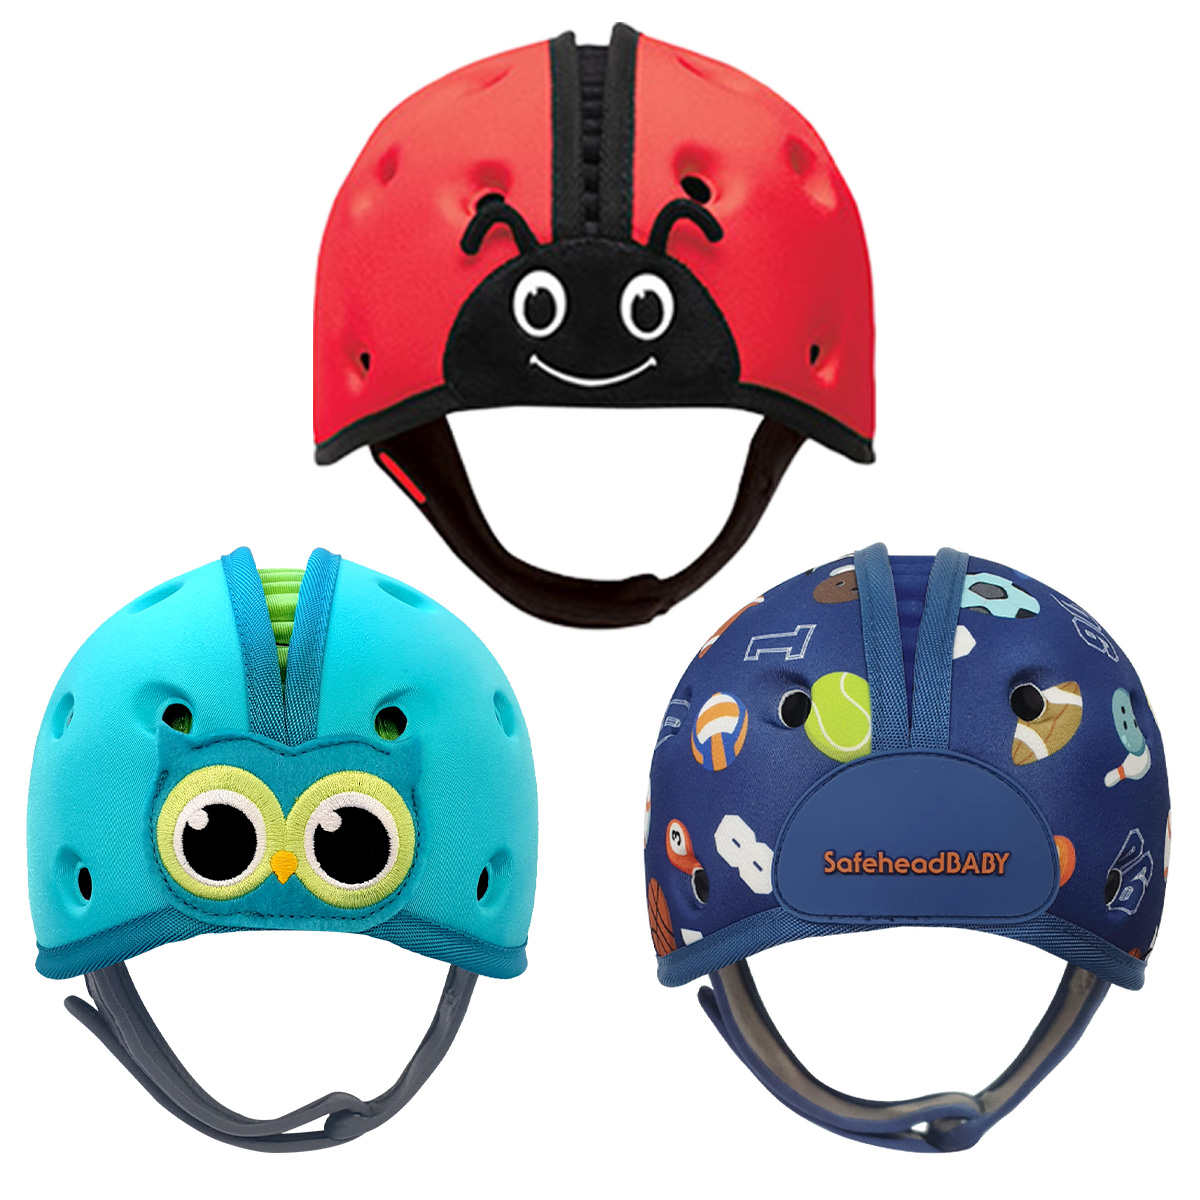 SafeHeadBaby Baby Helmet